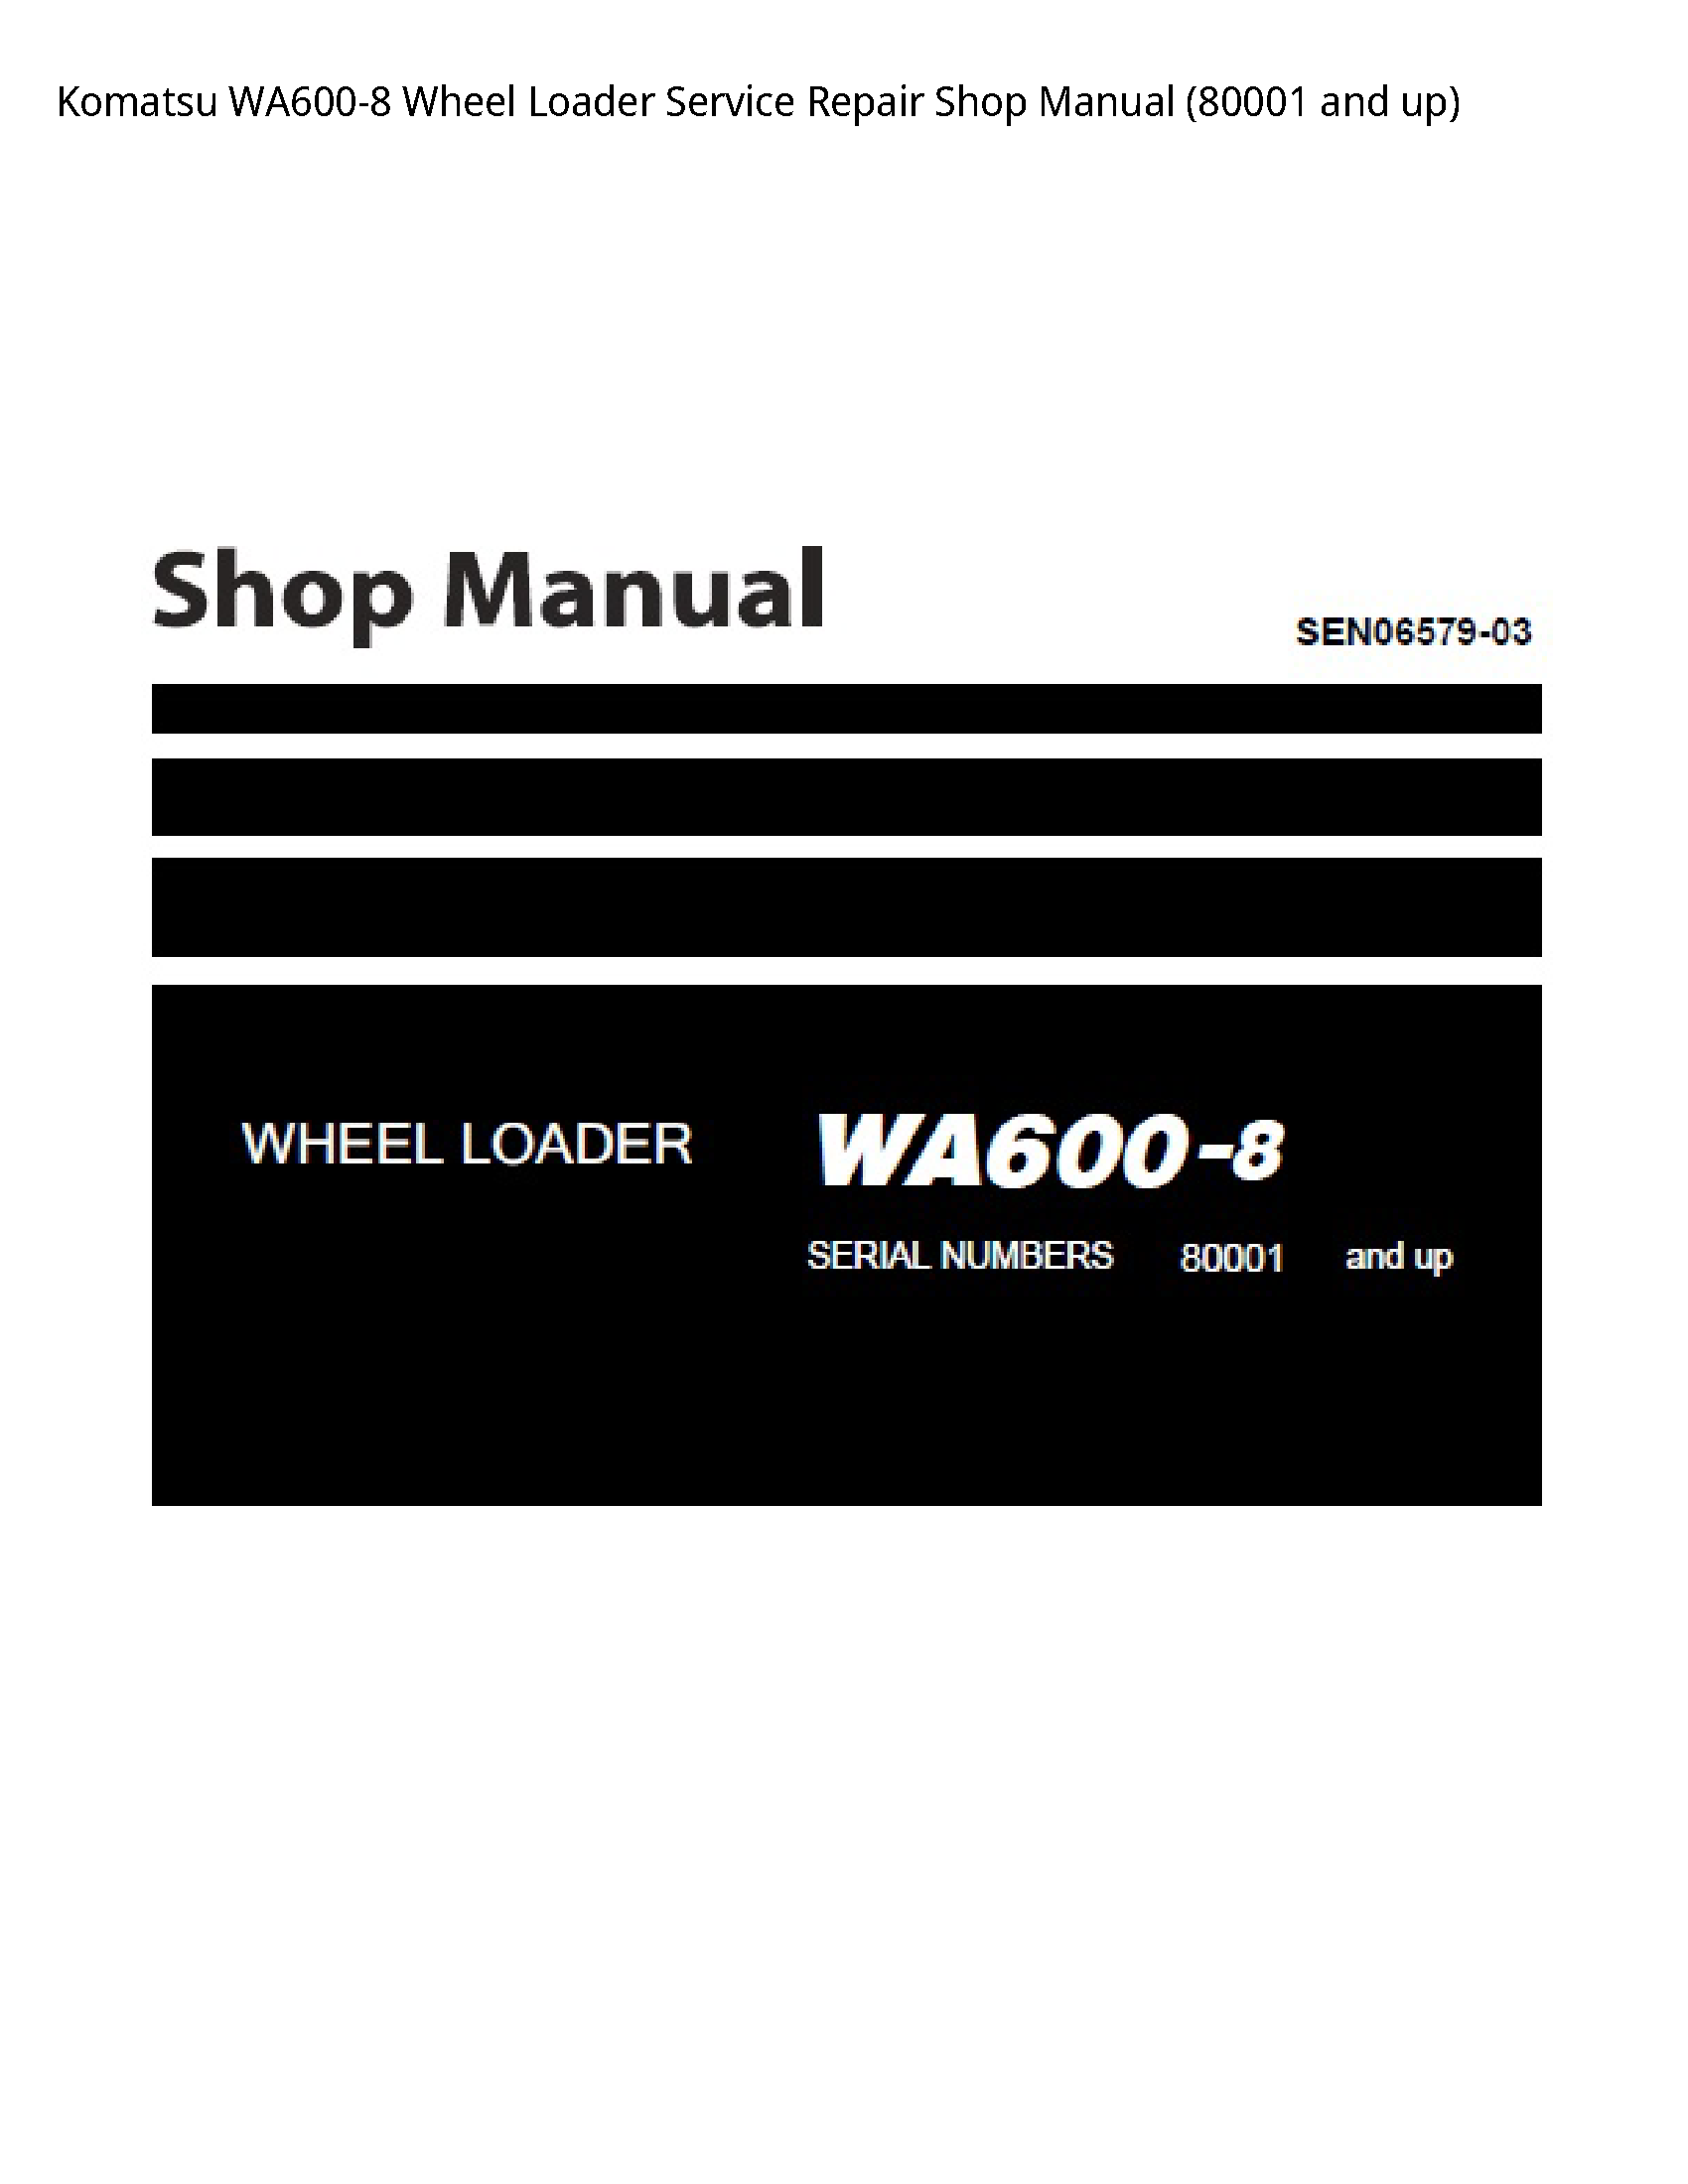 KOMATSU WA600-8 Wheel Loader manual